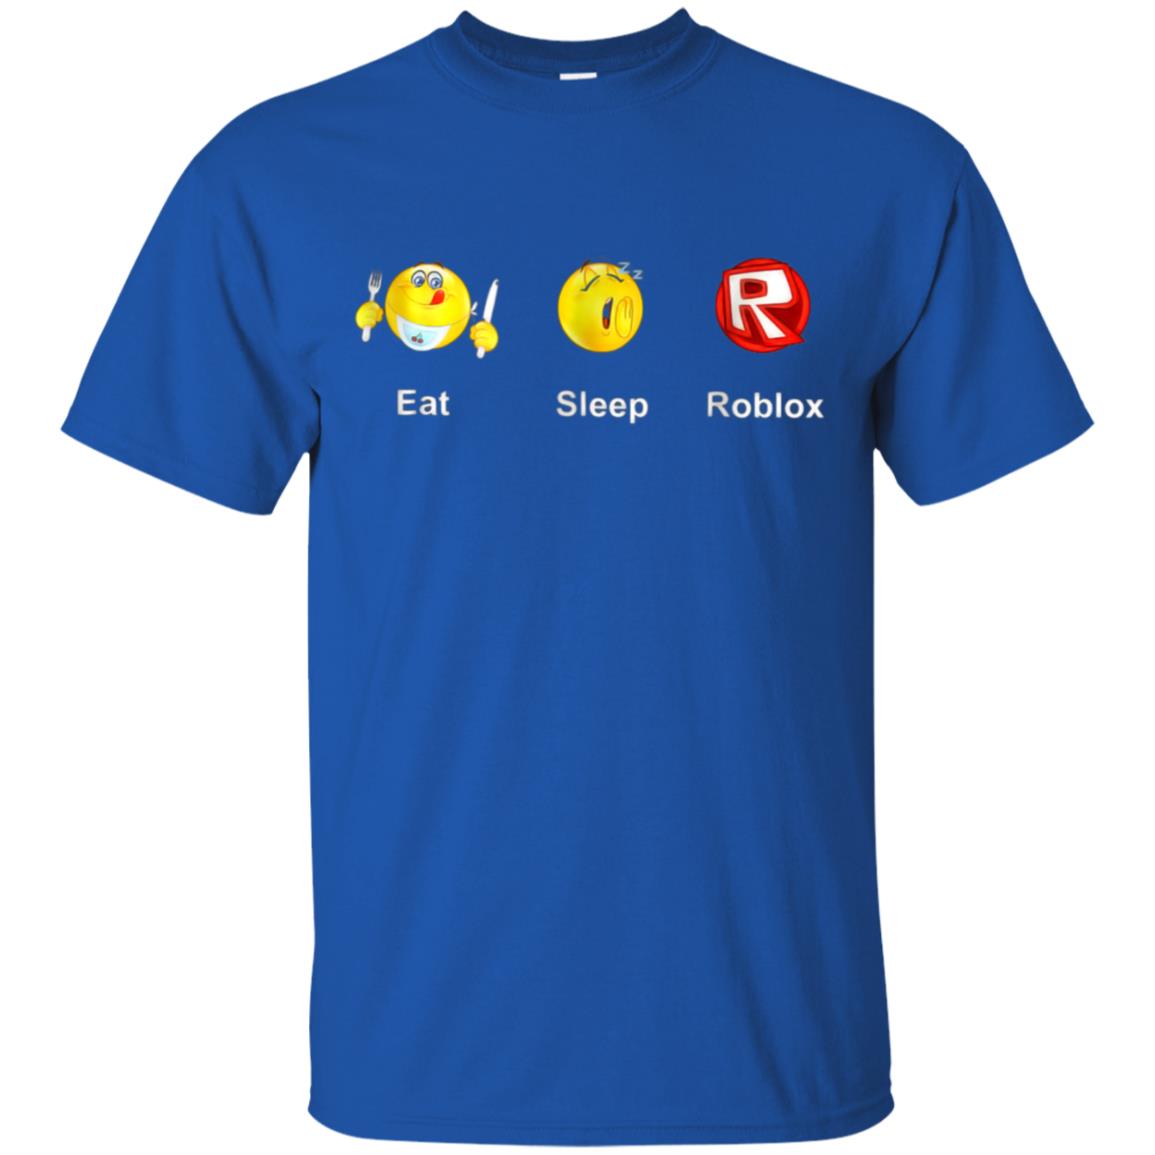 Awesome Eat Sleep Roblox Gift T Shirt 99promocode - roblox vietnam shirt